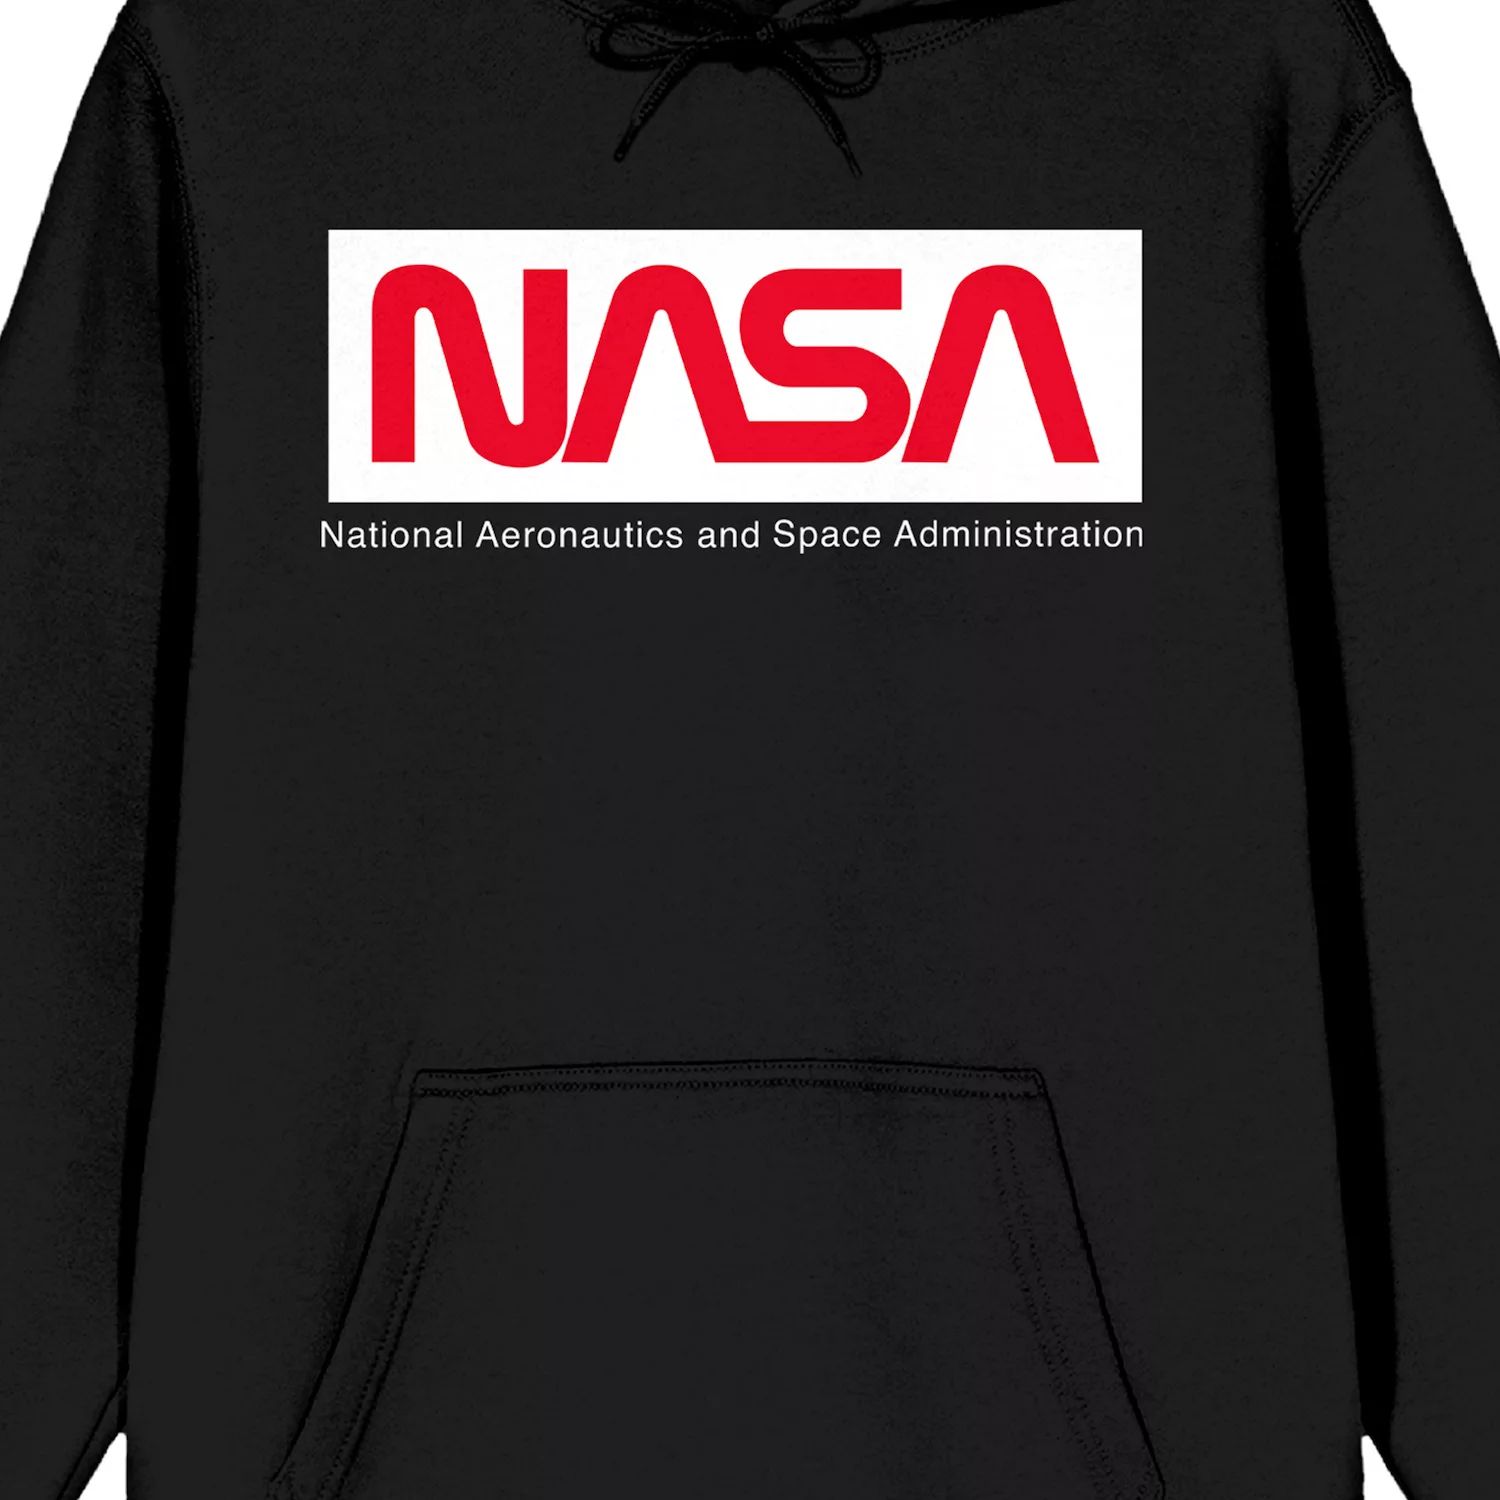 Мужская толстовка с классическим логотипом NASA Licensed Character